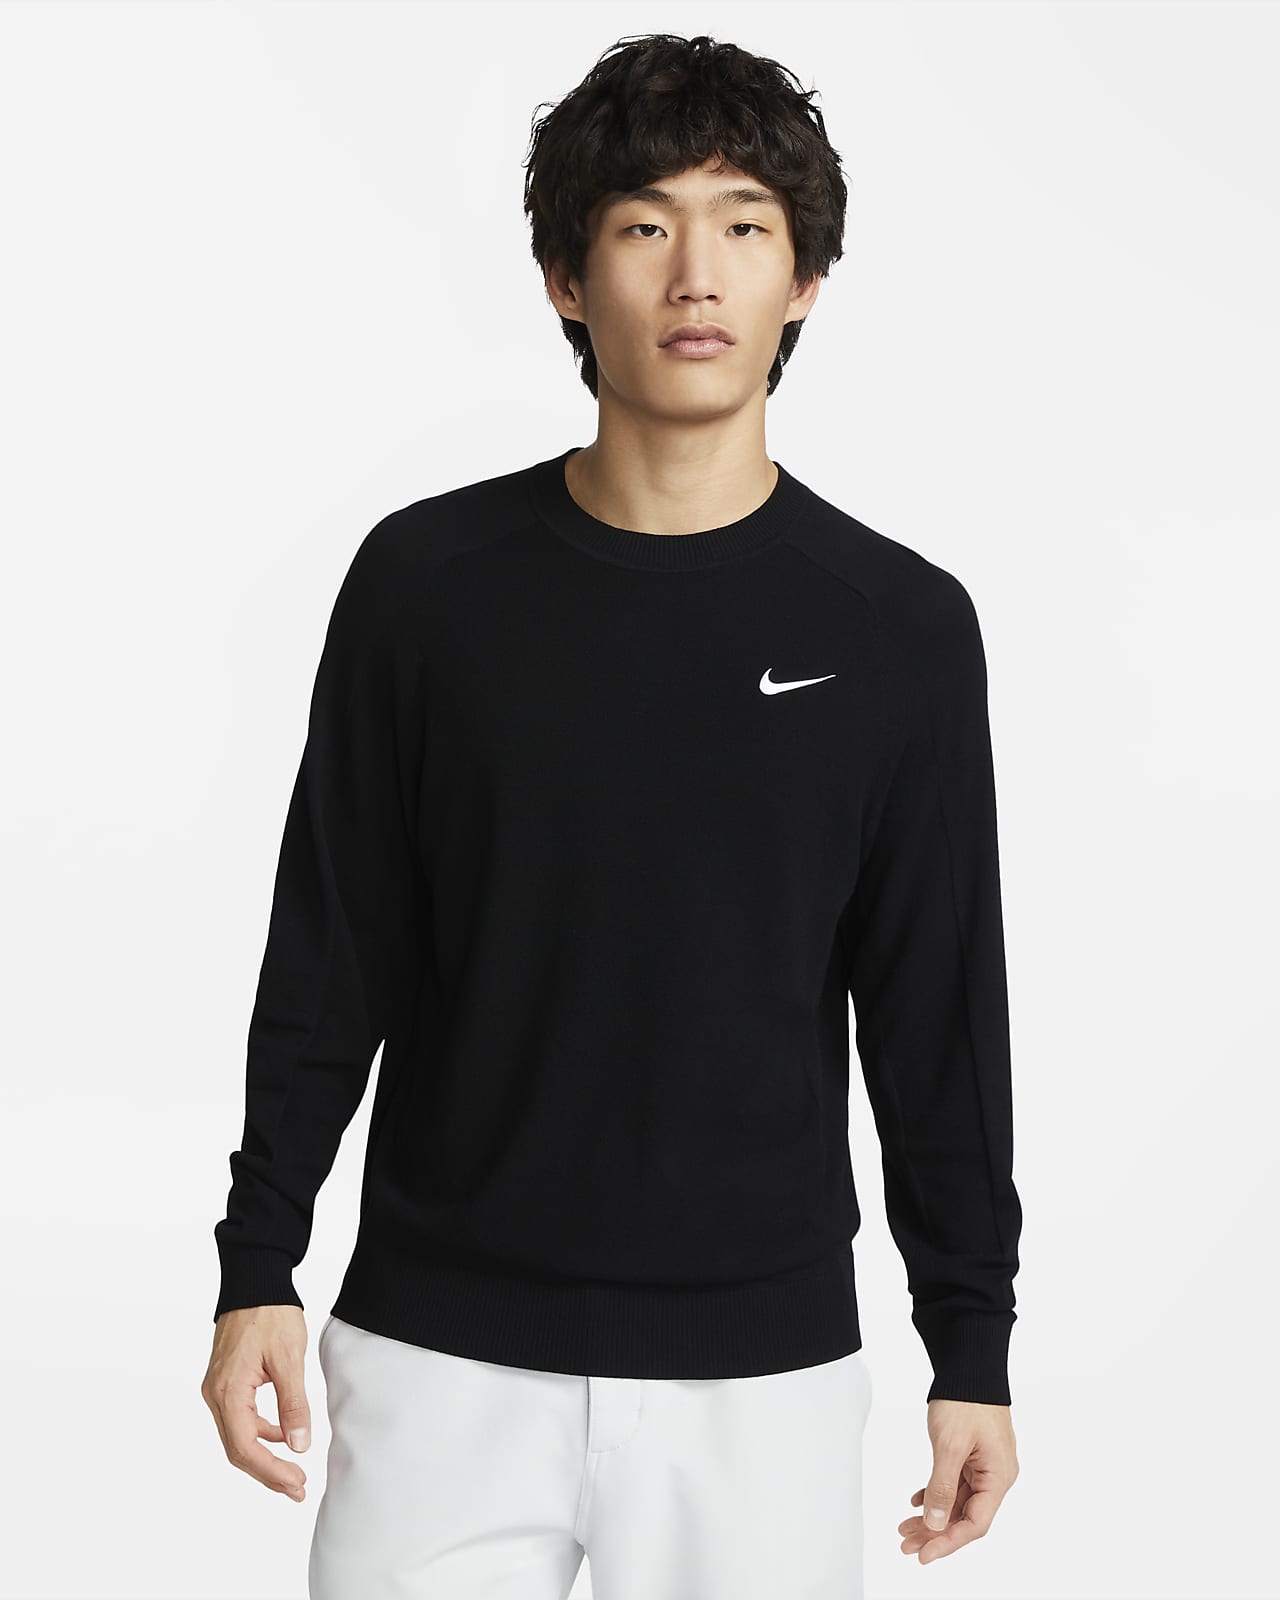 Tiger Woods Men's Golf Sweater. Nike JP